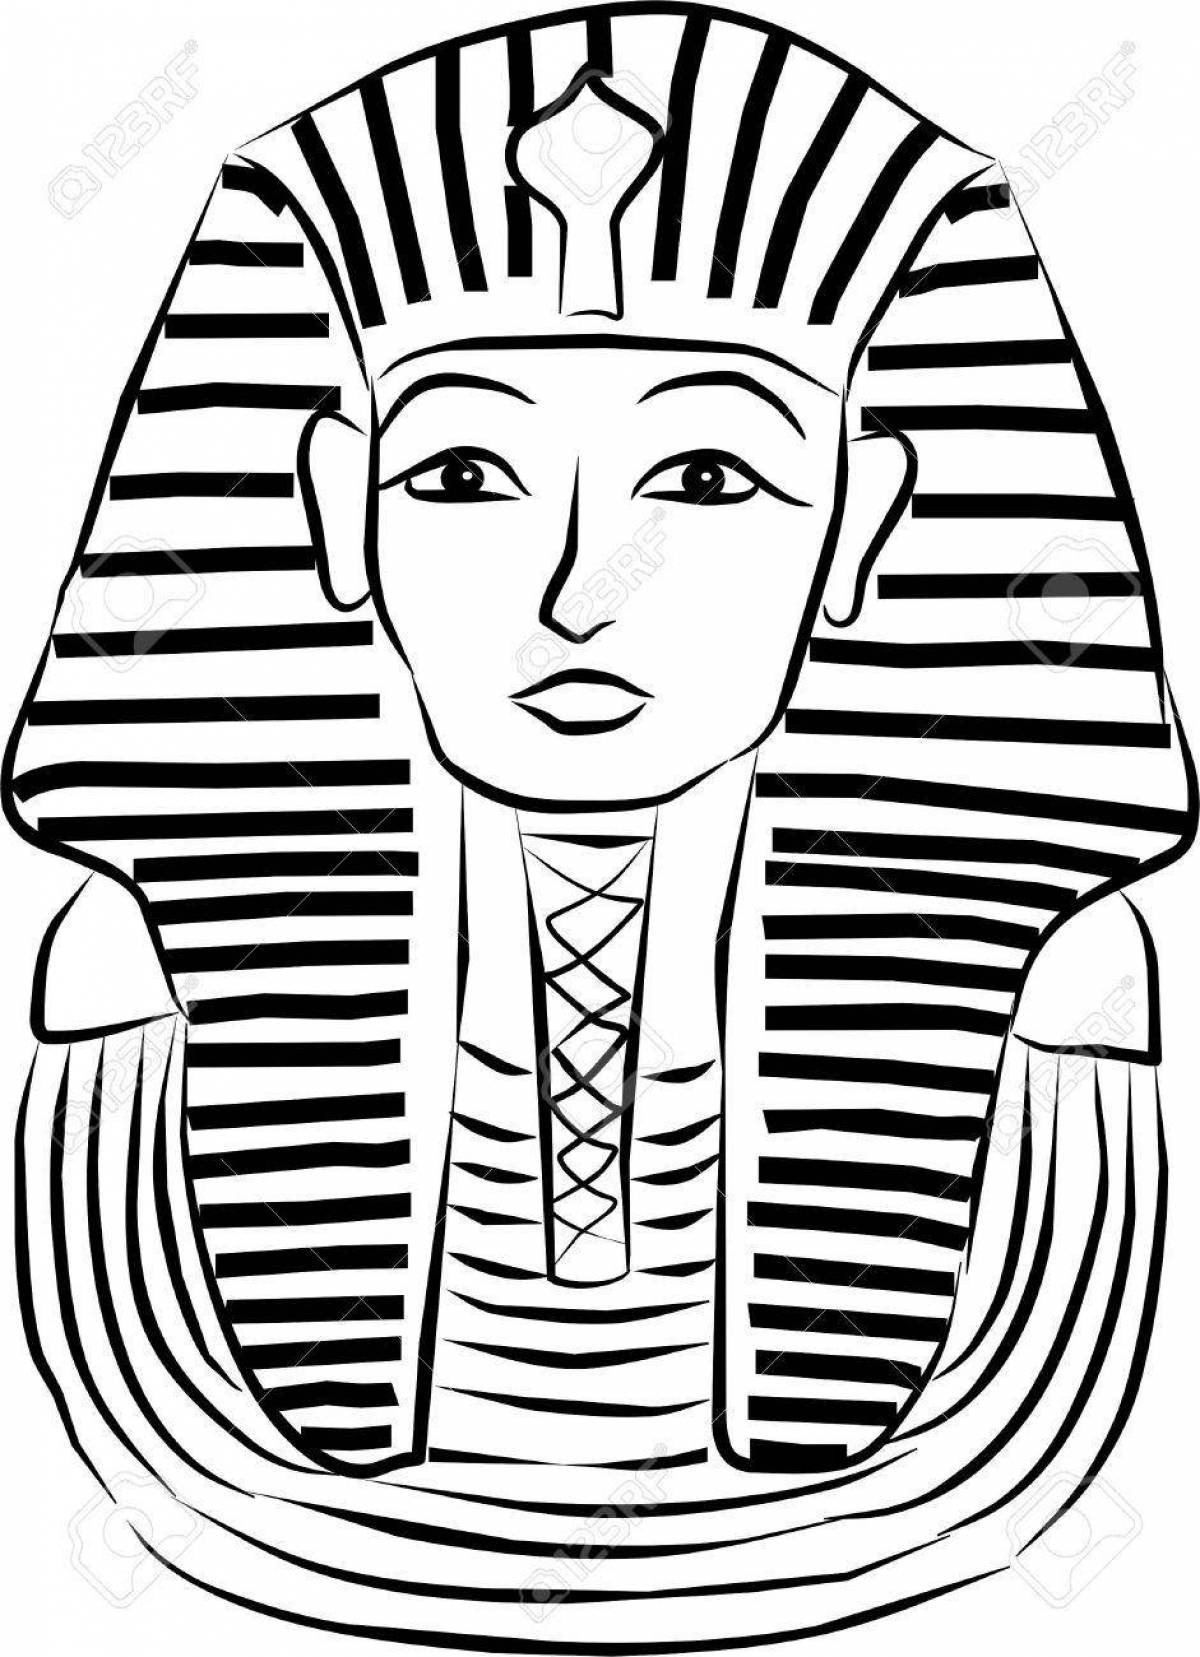 Mask of pharaoh tutankhamen from class 5 #3